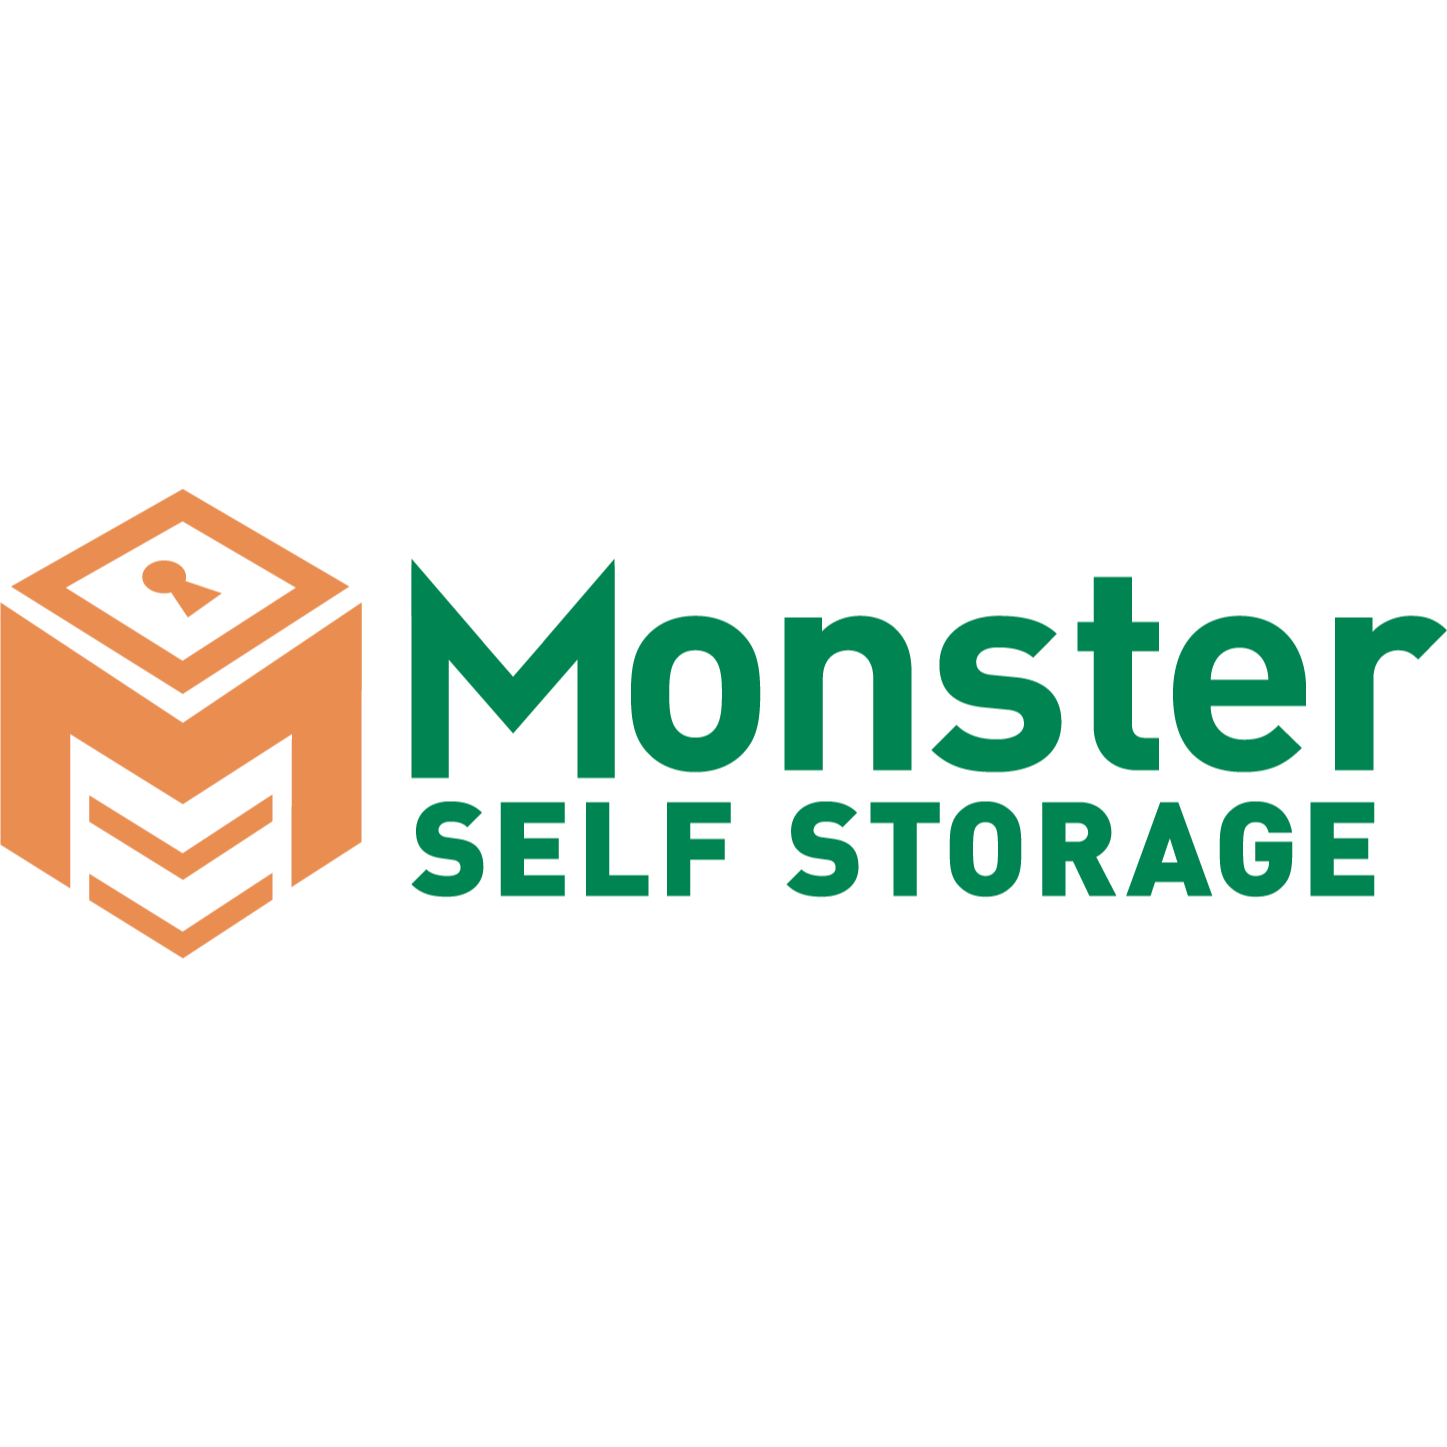 Monster Self Storage Bluffton - Bluffton, SC 29910 - (843)474-5414 | ShowMeLocal.com